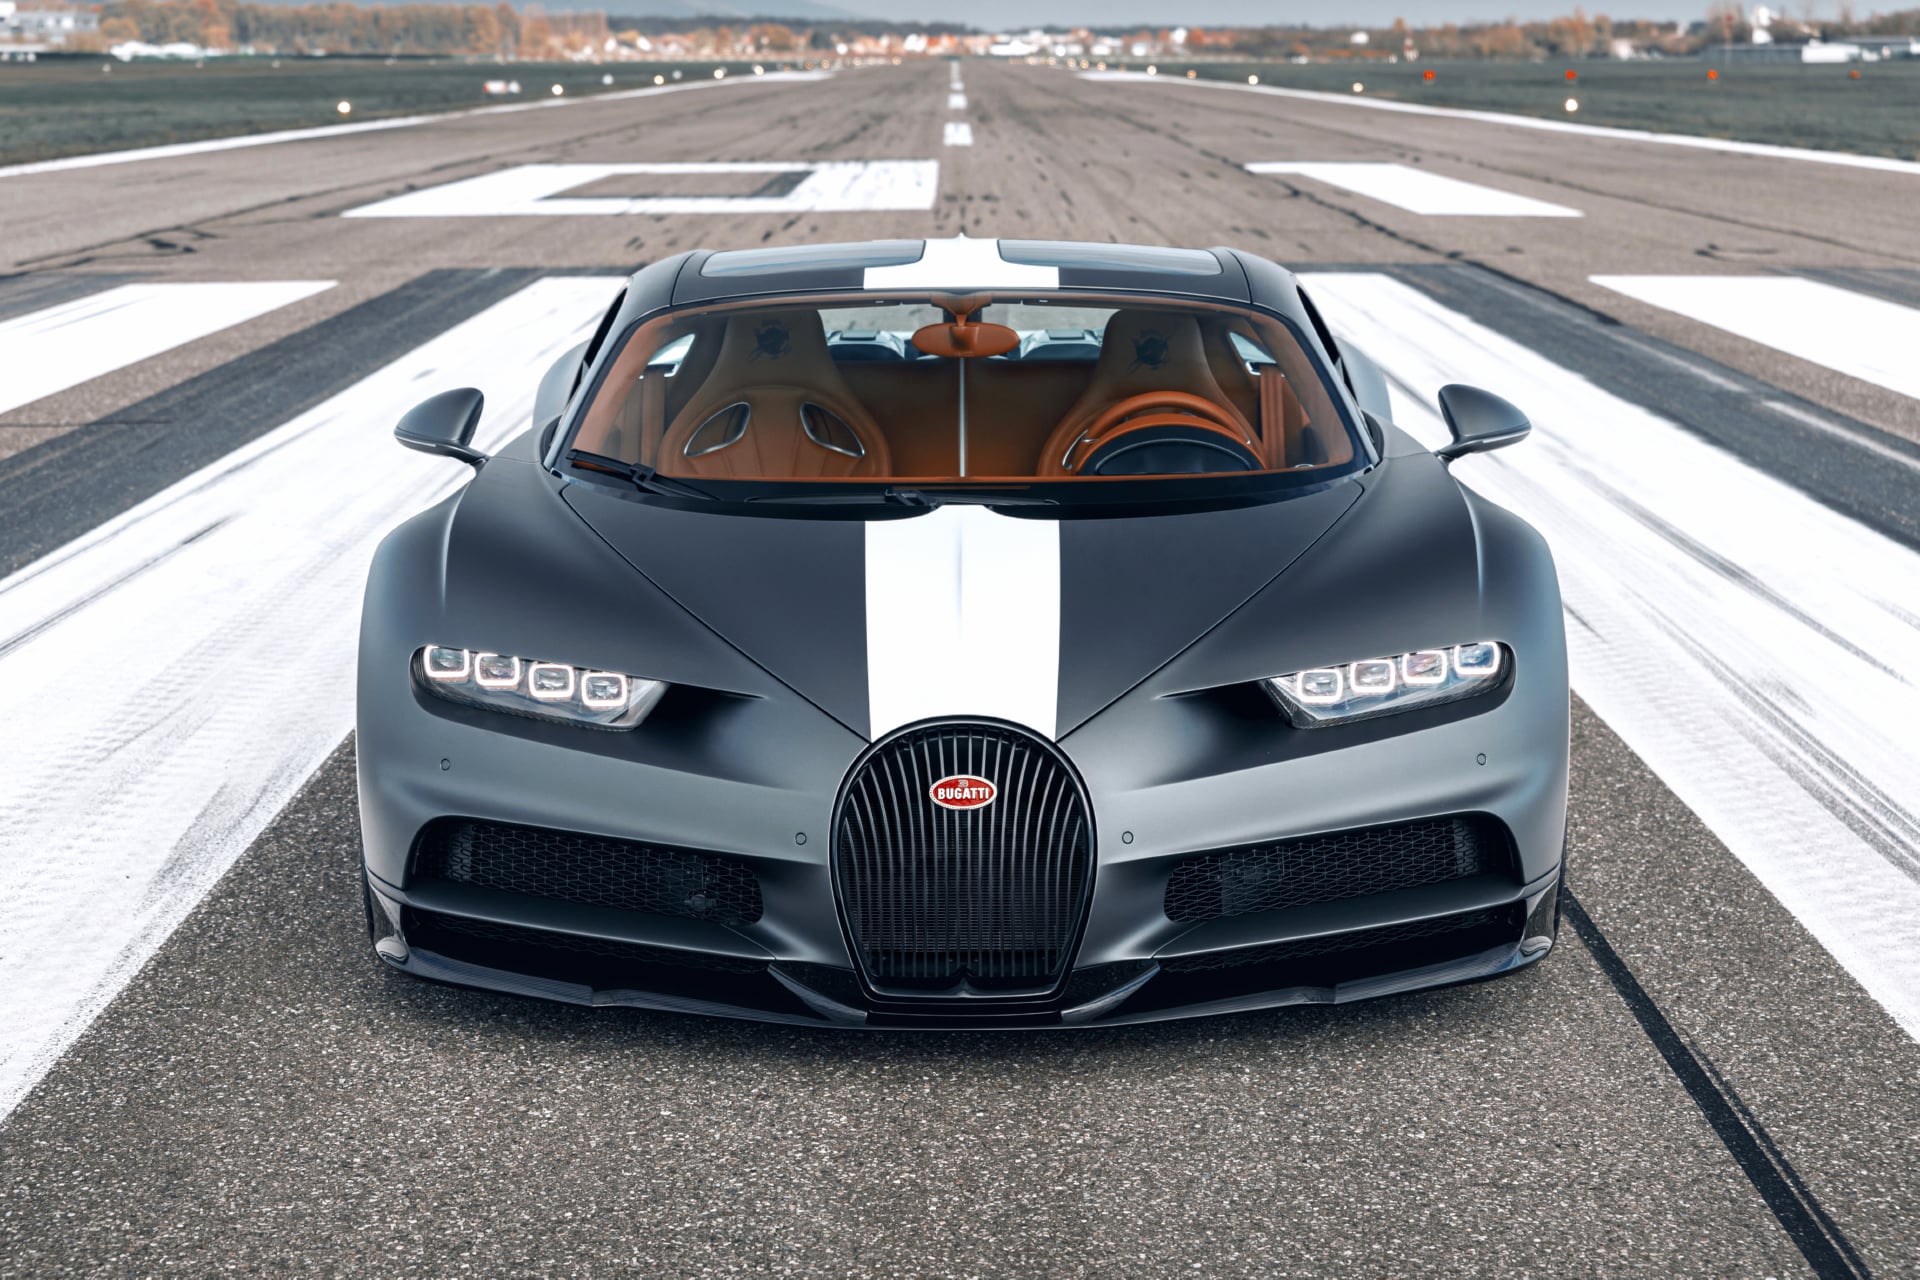 Bugatti Chiron Sport Les Légendes du Ciel at 640 x 1136 iPhone 5 size wallpapers HD quality